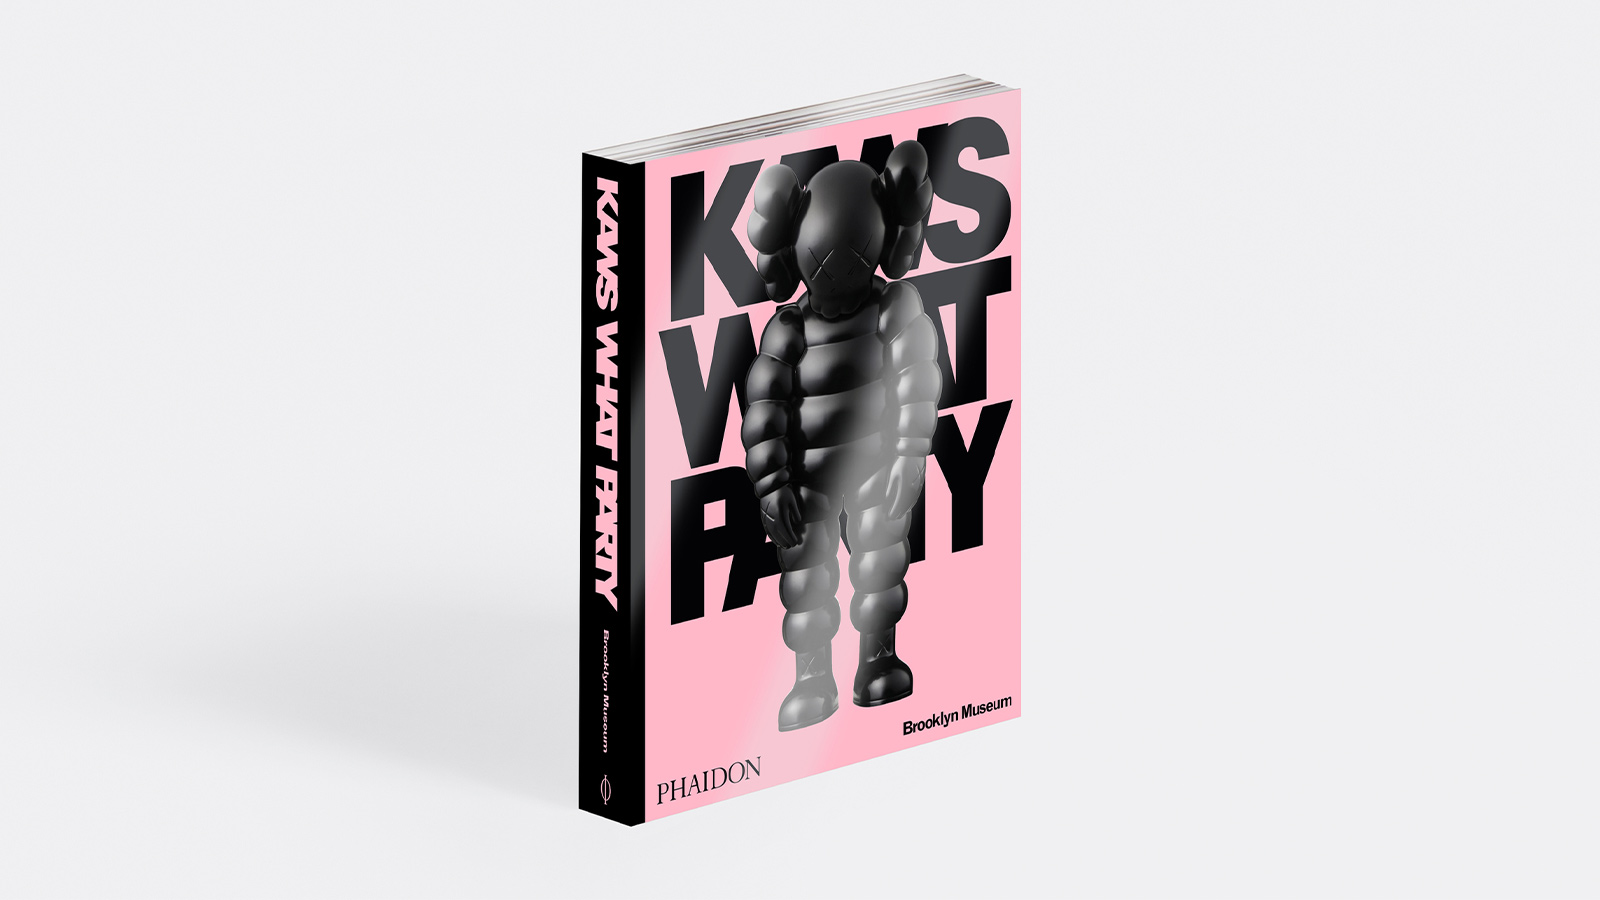 'KAWS: WHAT PARTY' by Daniel Birnbaum and Eugenie Tsai Price